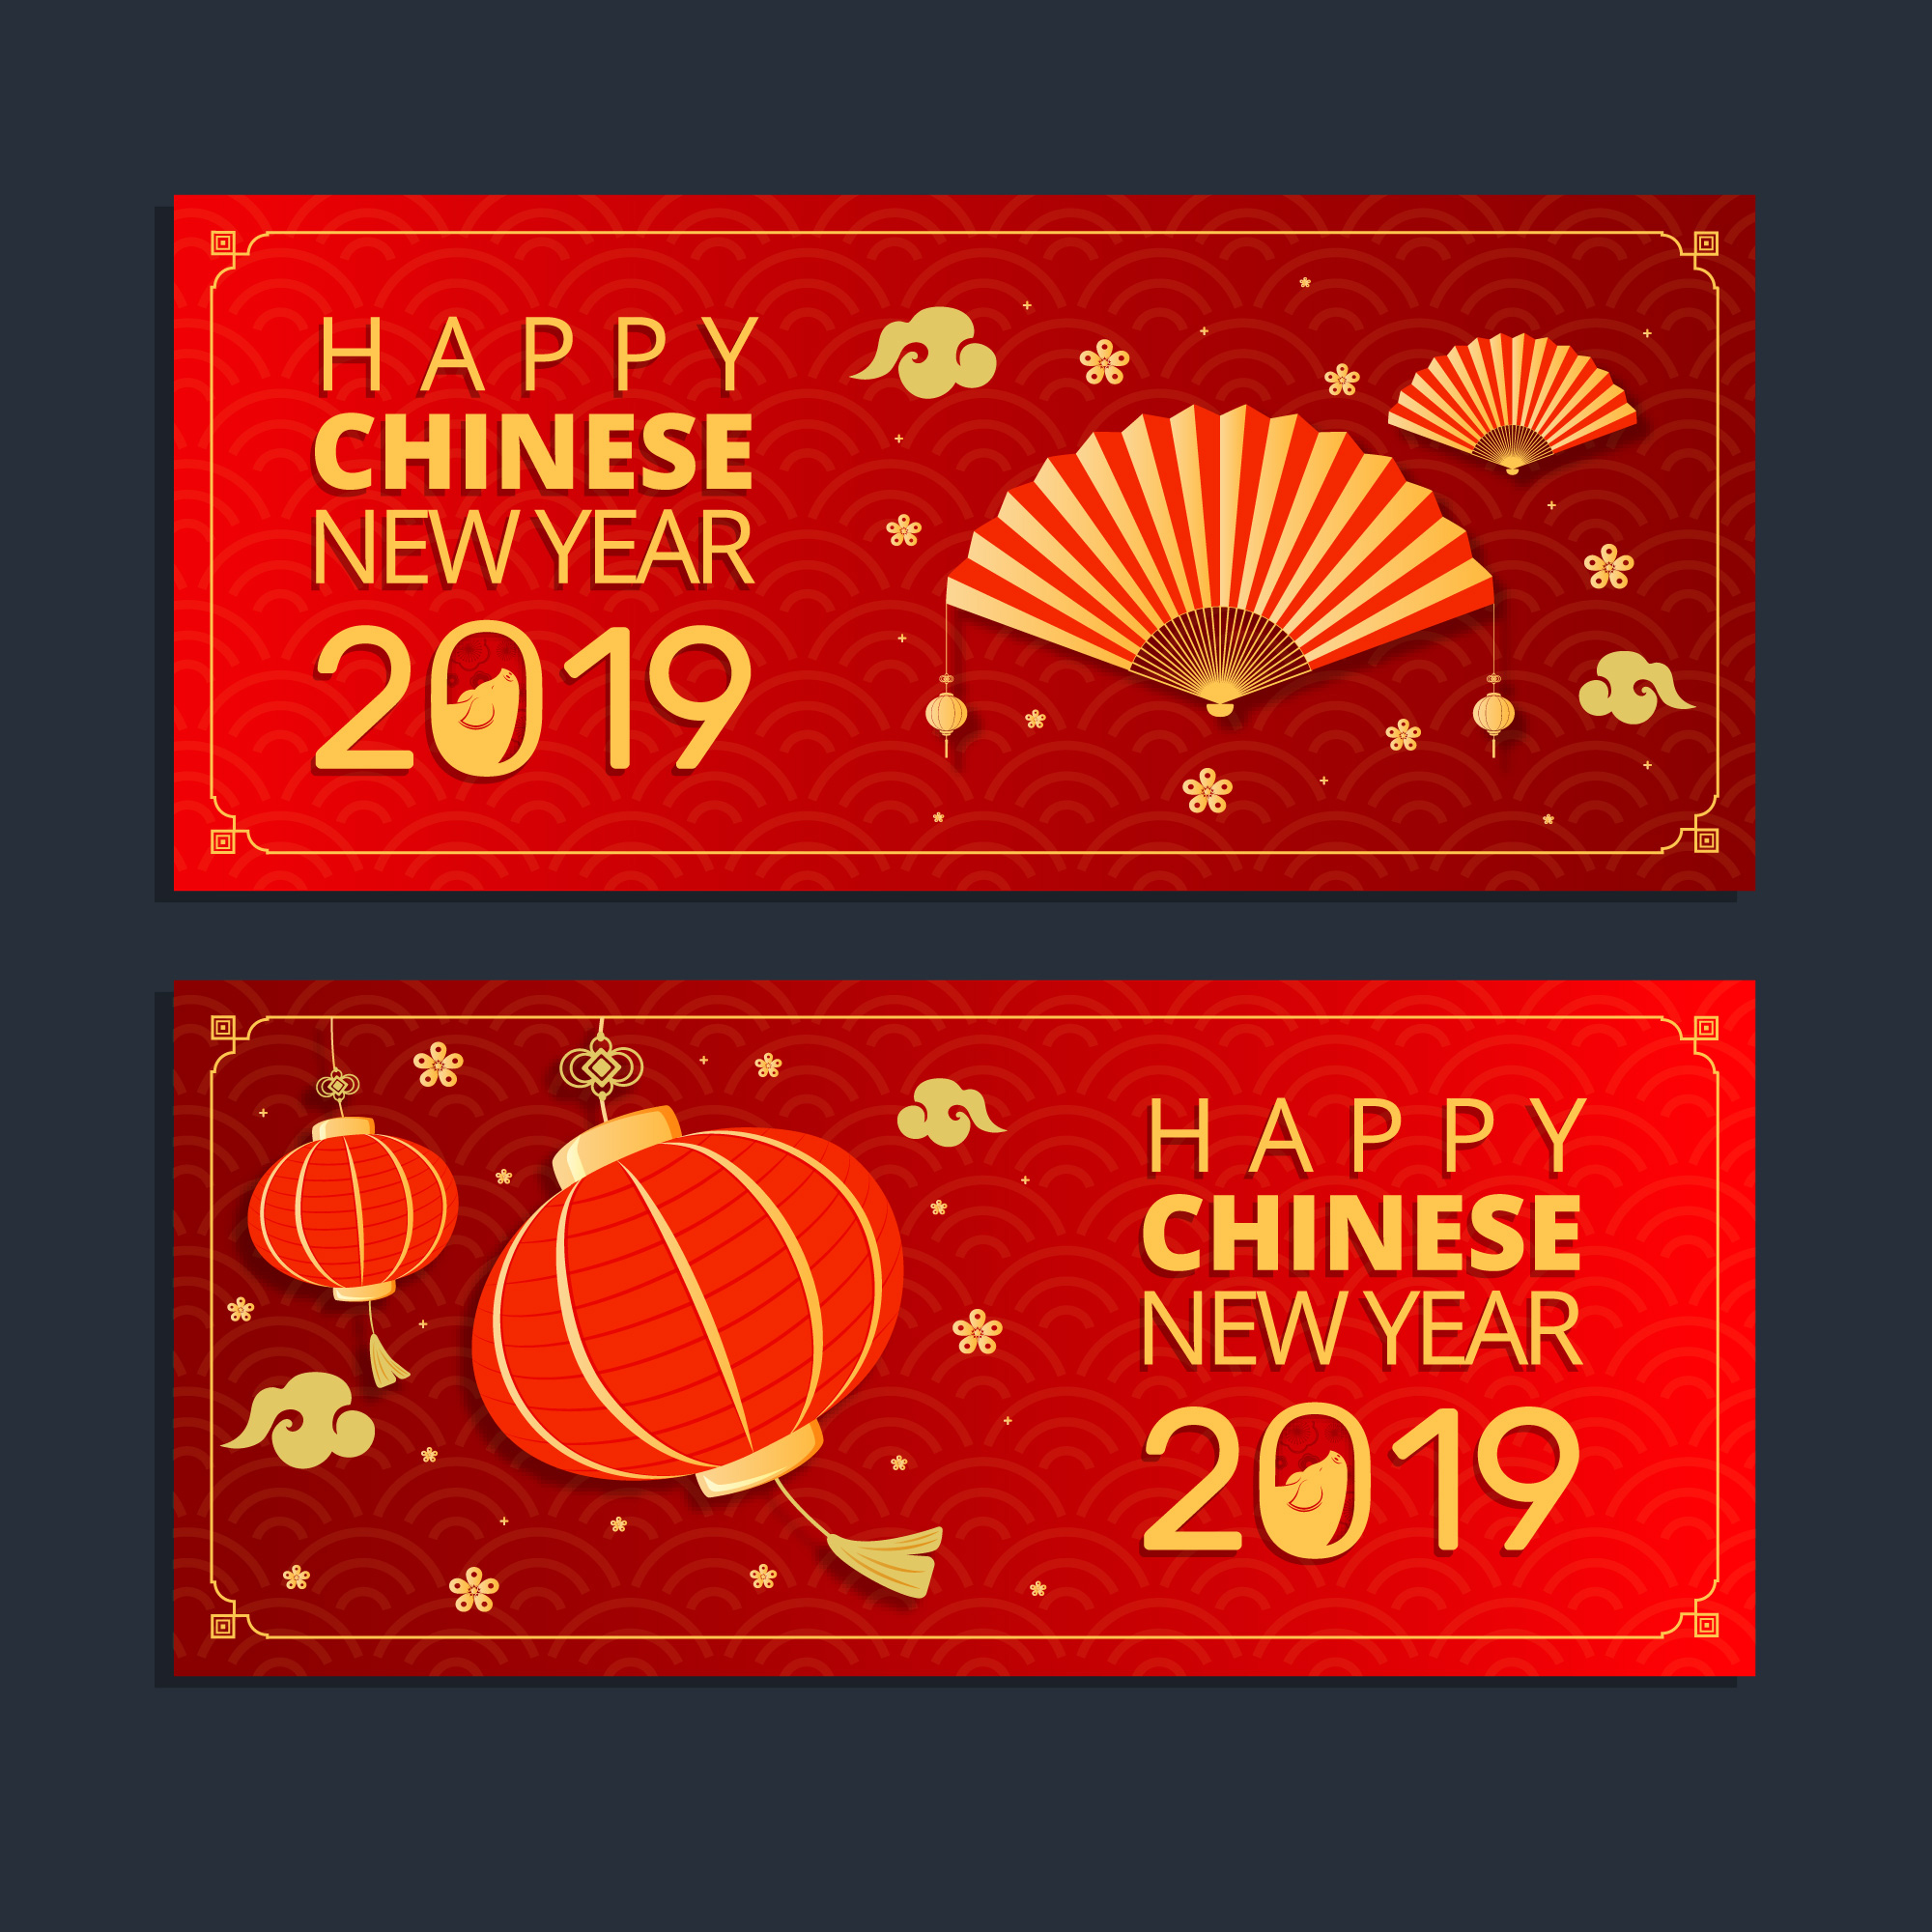 2019新年农历猪年贺卡矢量素材模板 2019 New Year Lunar Year Of The Pig Greeting Card Vector Material Template插图2